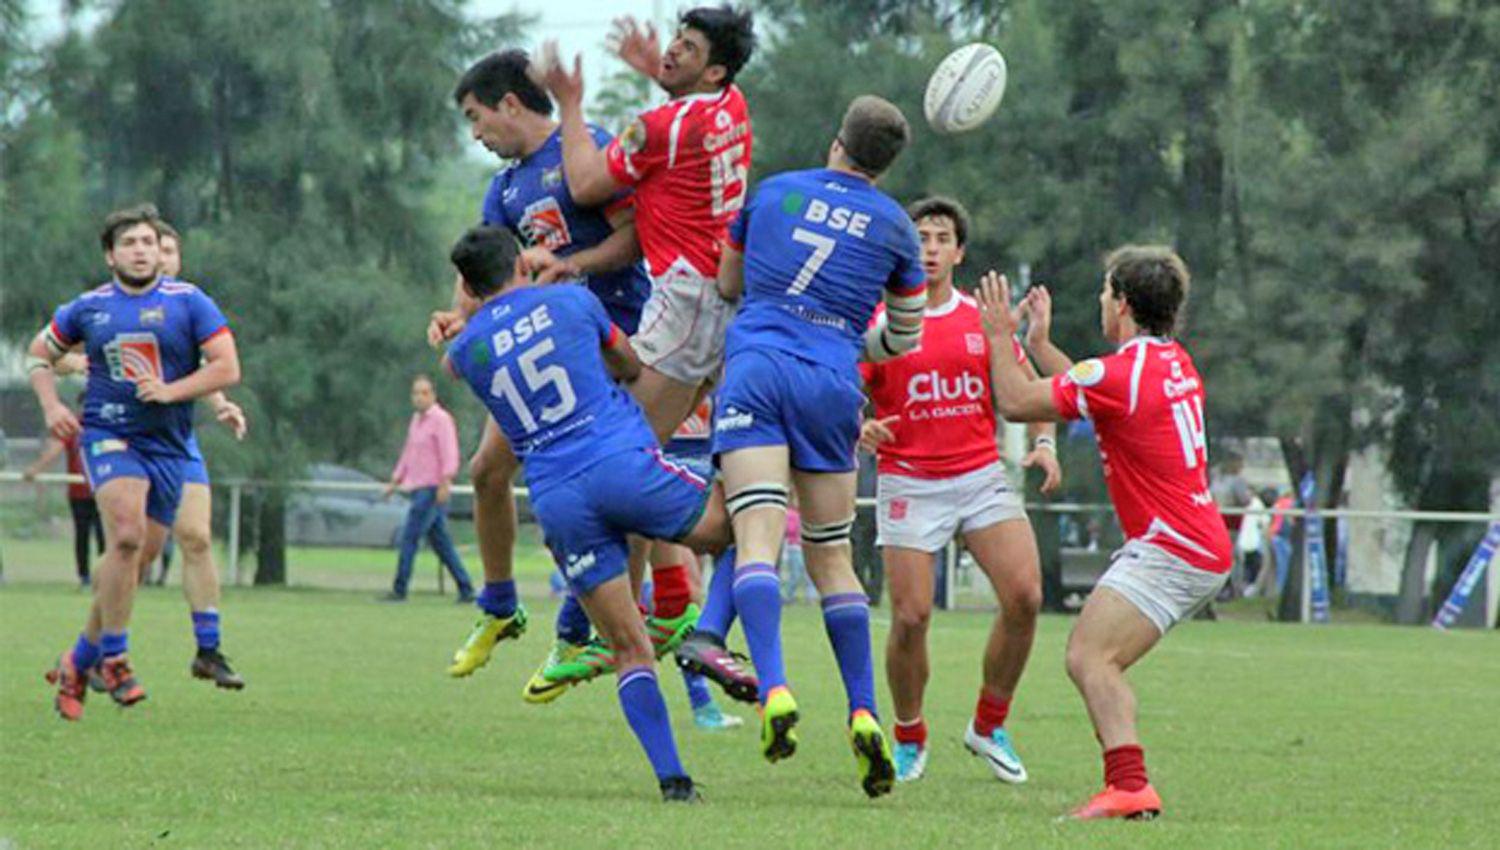 Old Lions juega un torneo Interprovincial en Salta